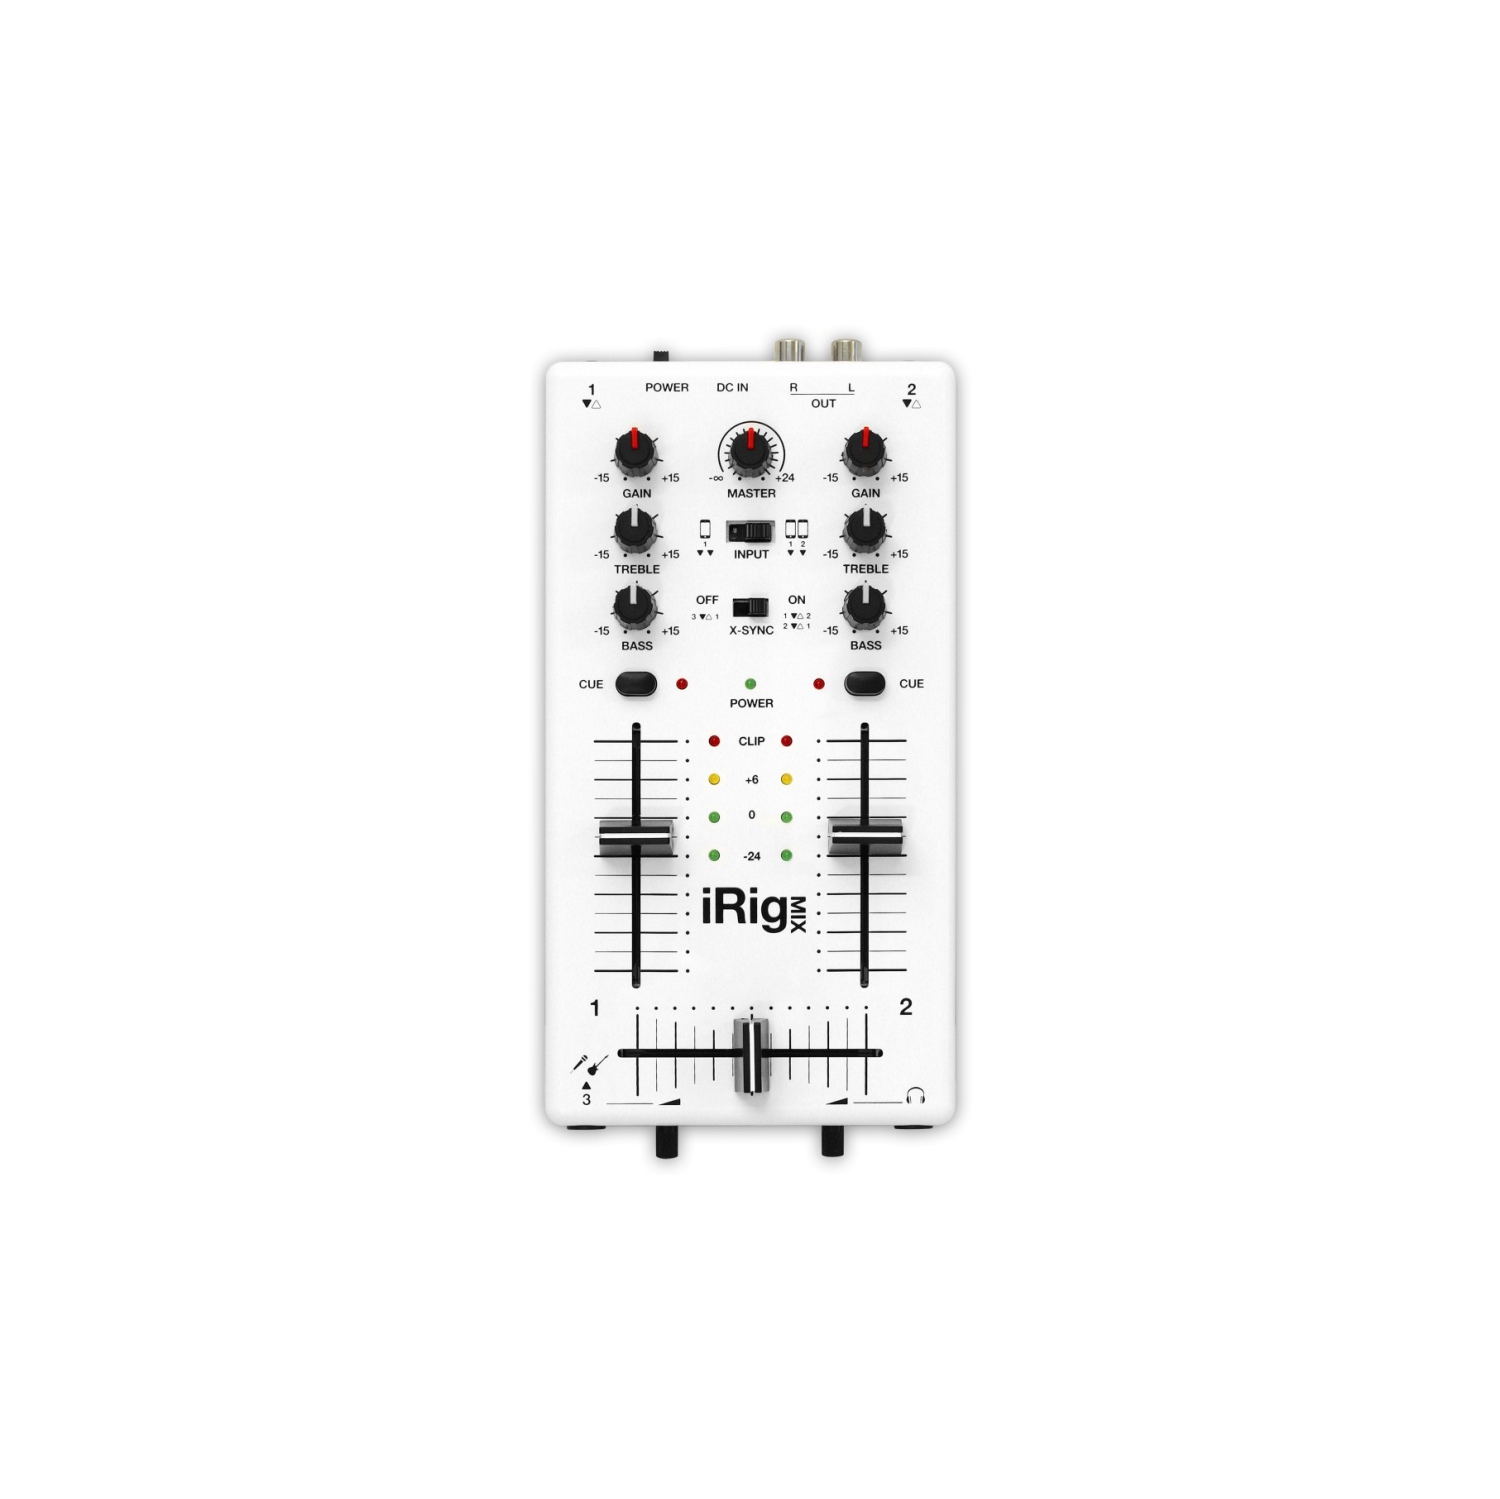 IK Multimedia iRig Mix DJ Style Mixer for iOS Devices